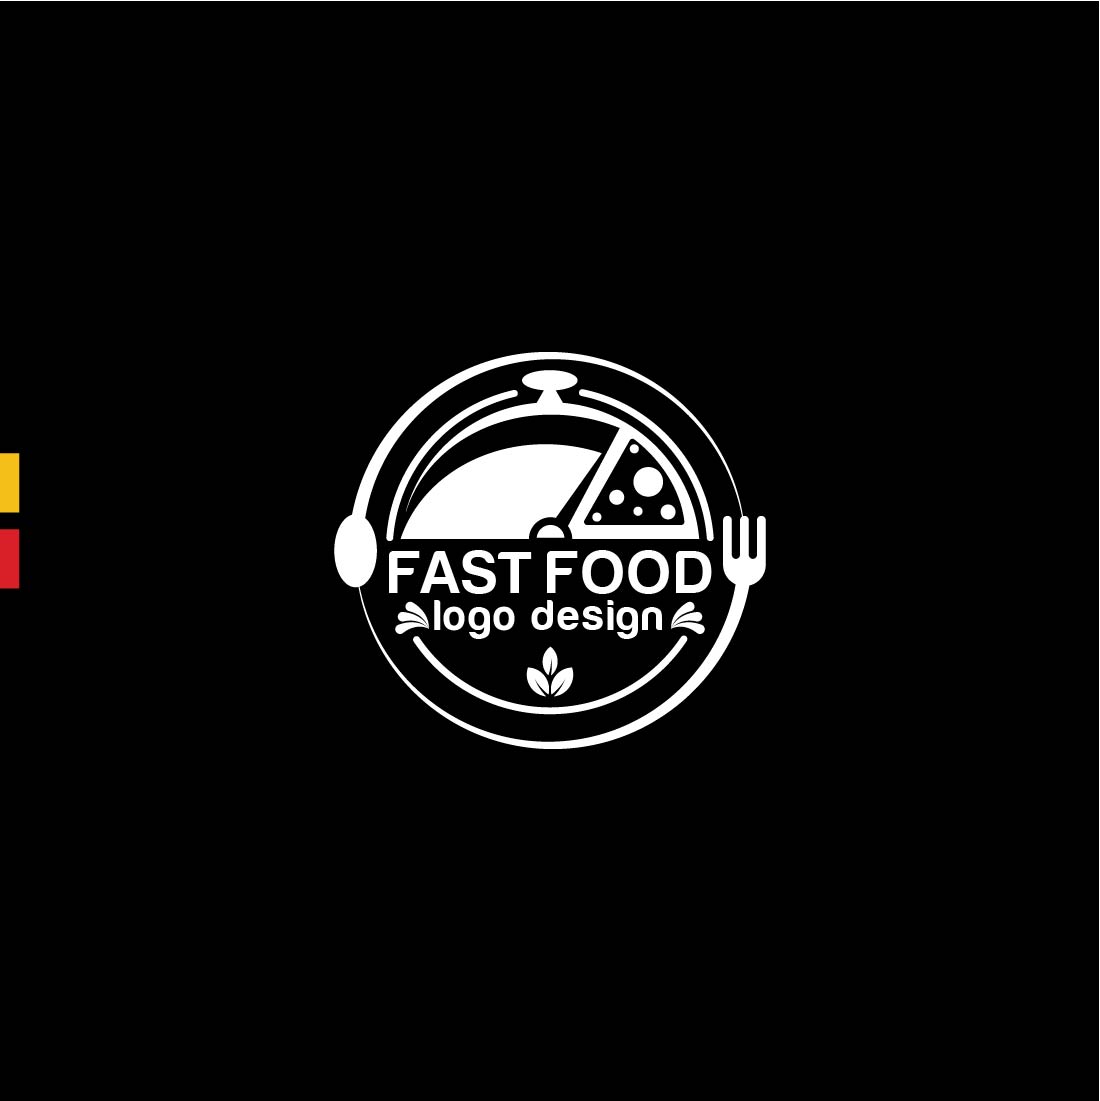 2 Fast Food Editable Logo Design on black background.